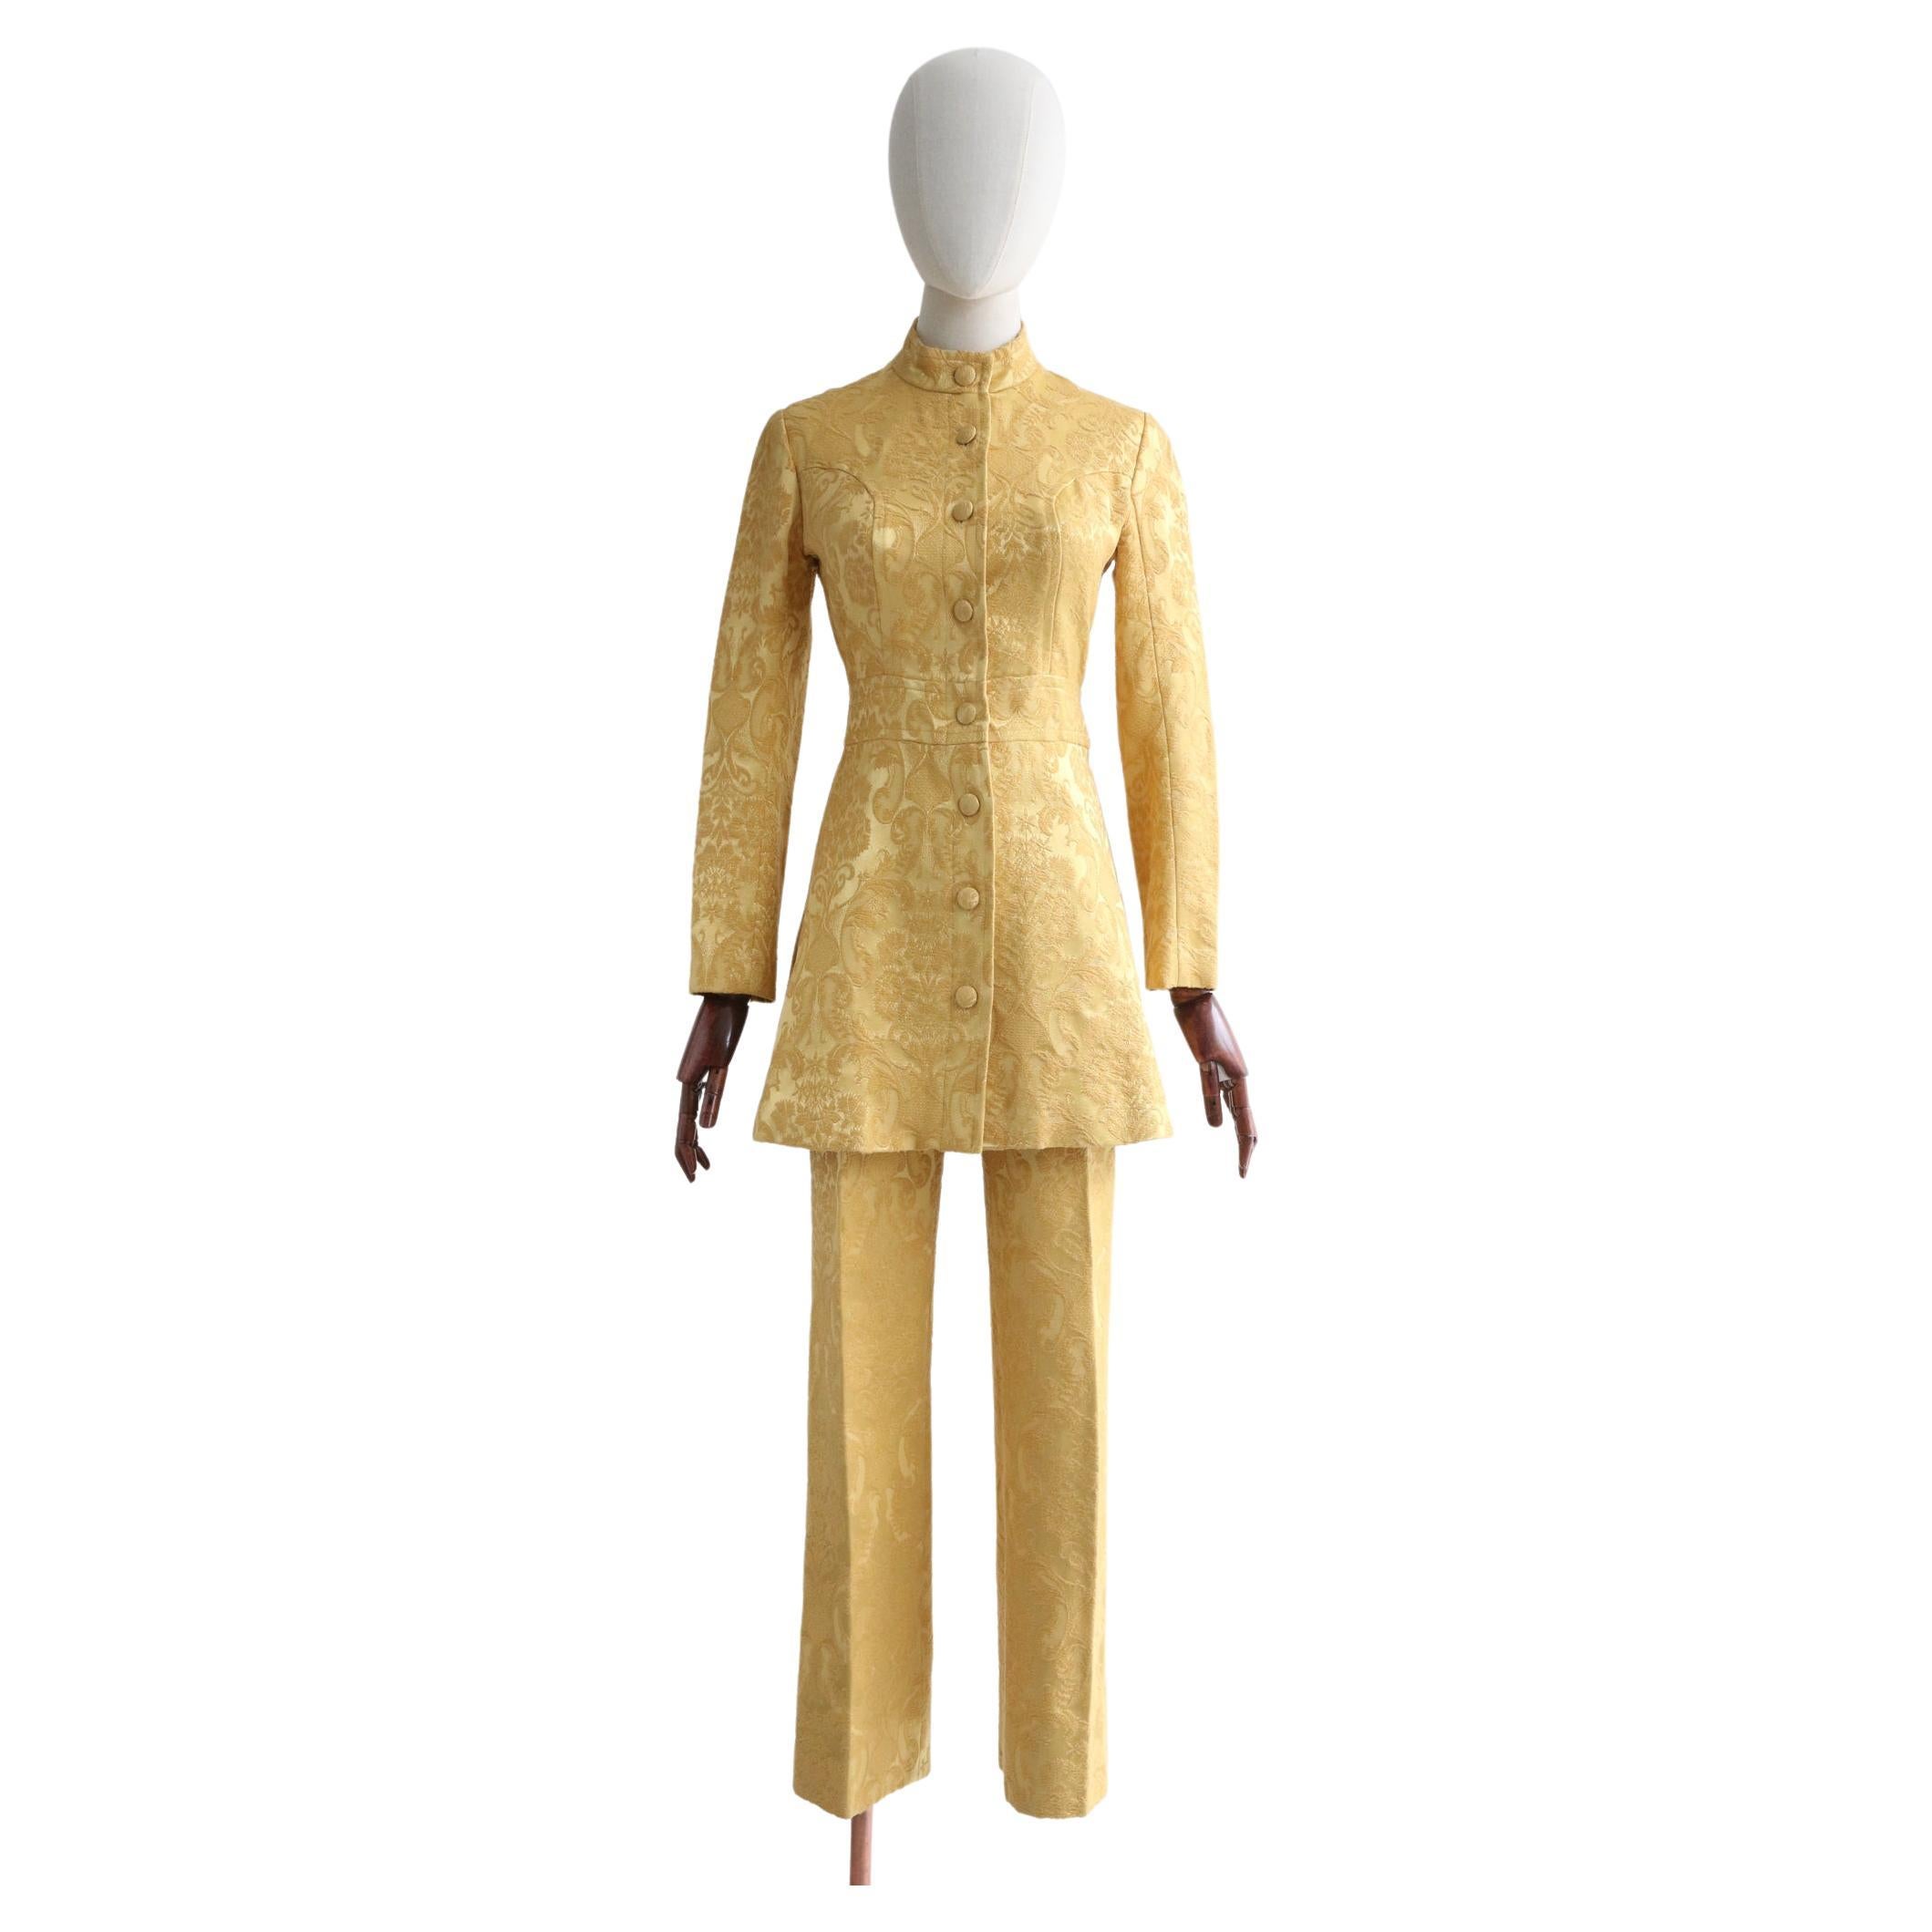 Vintage 1960's Janice Wainwright Gold Brocade Suit sixties trouser suit UK 6 